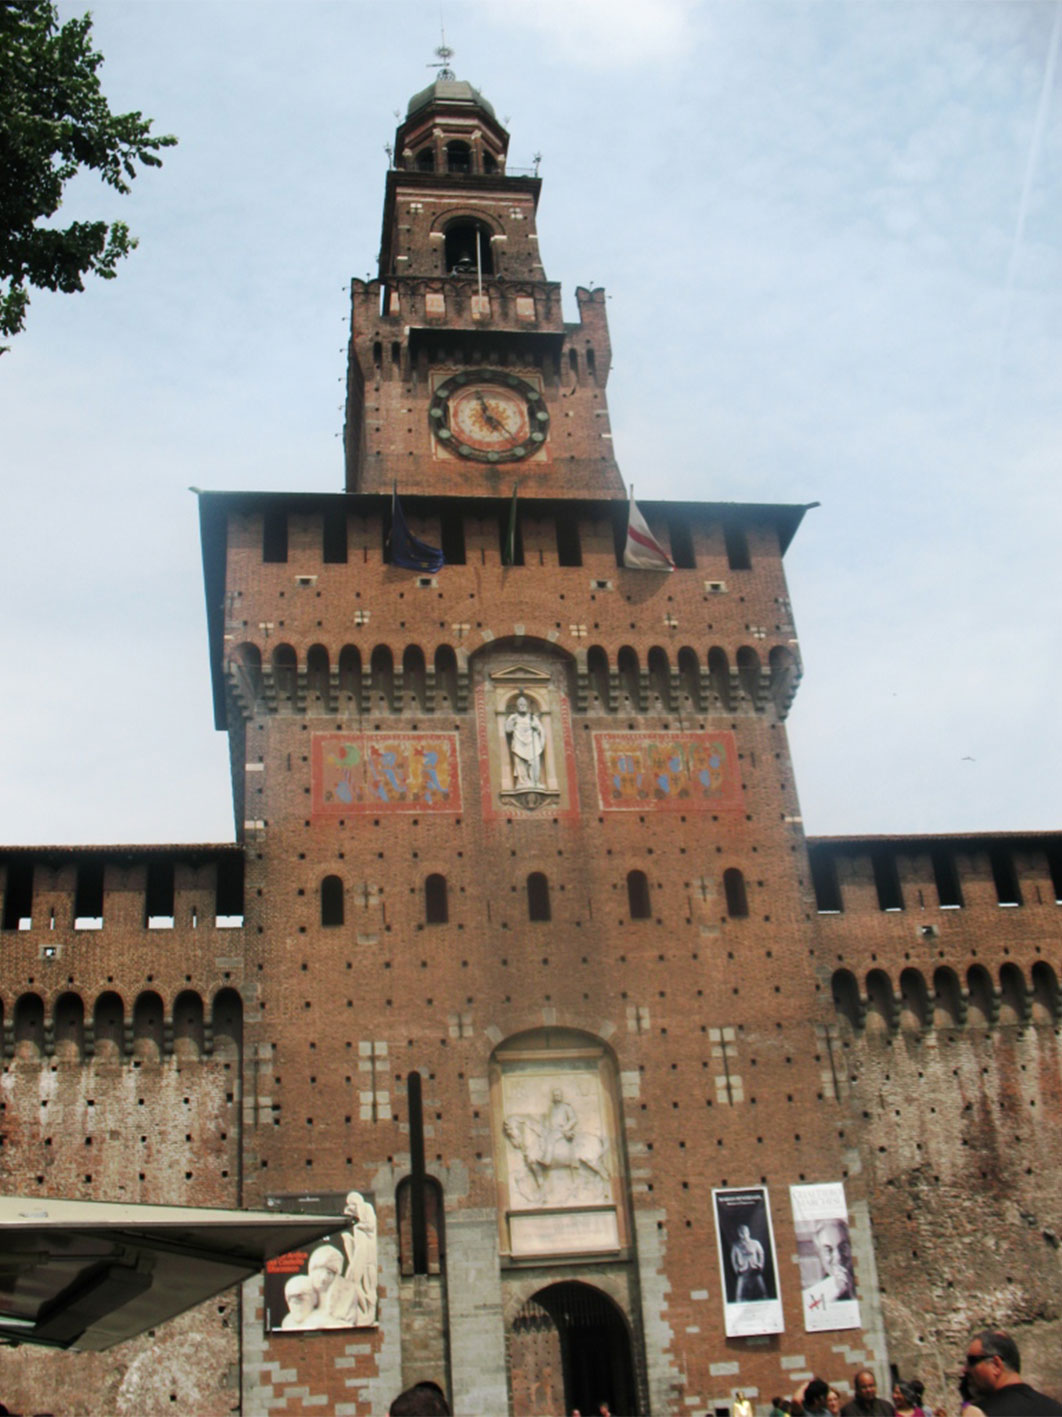 The Sforzesco Castle